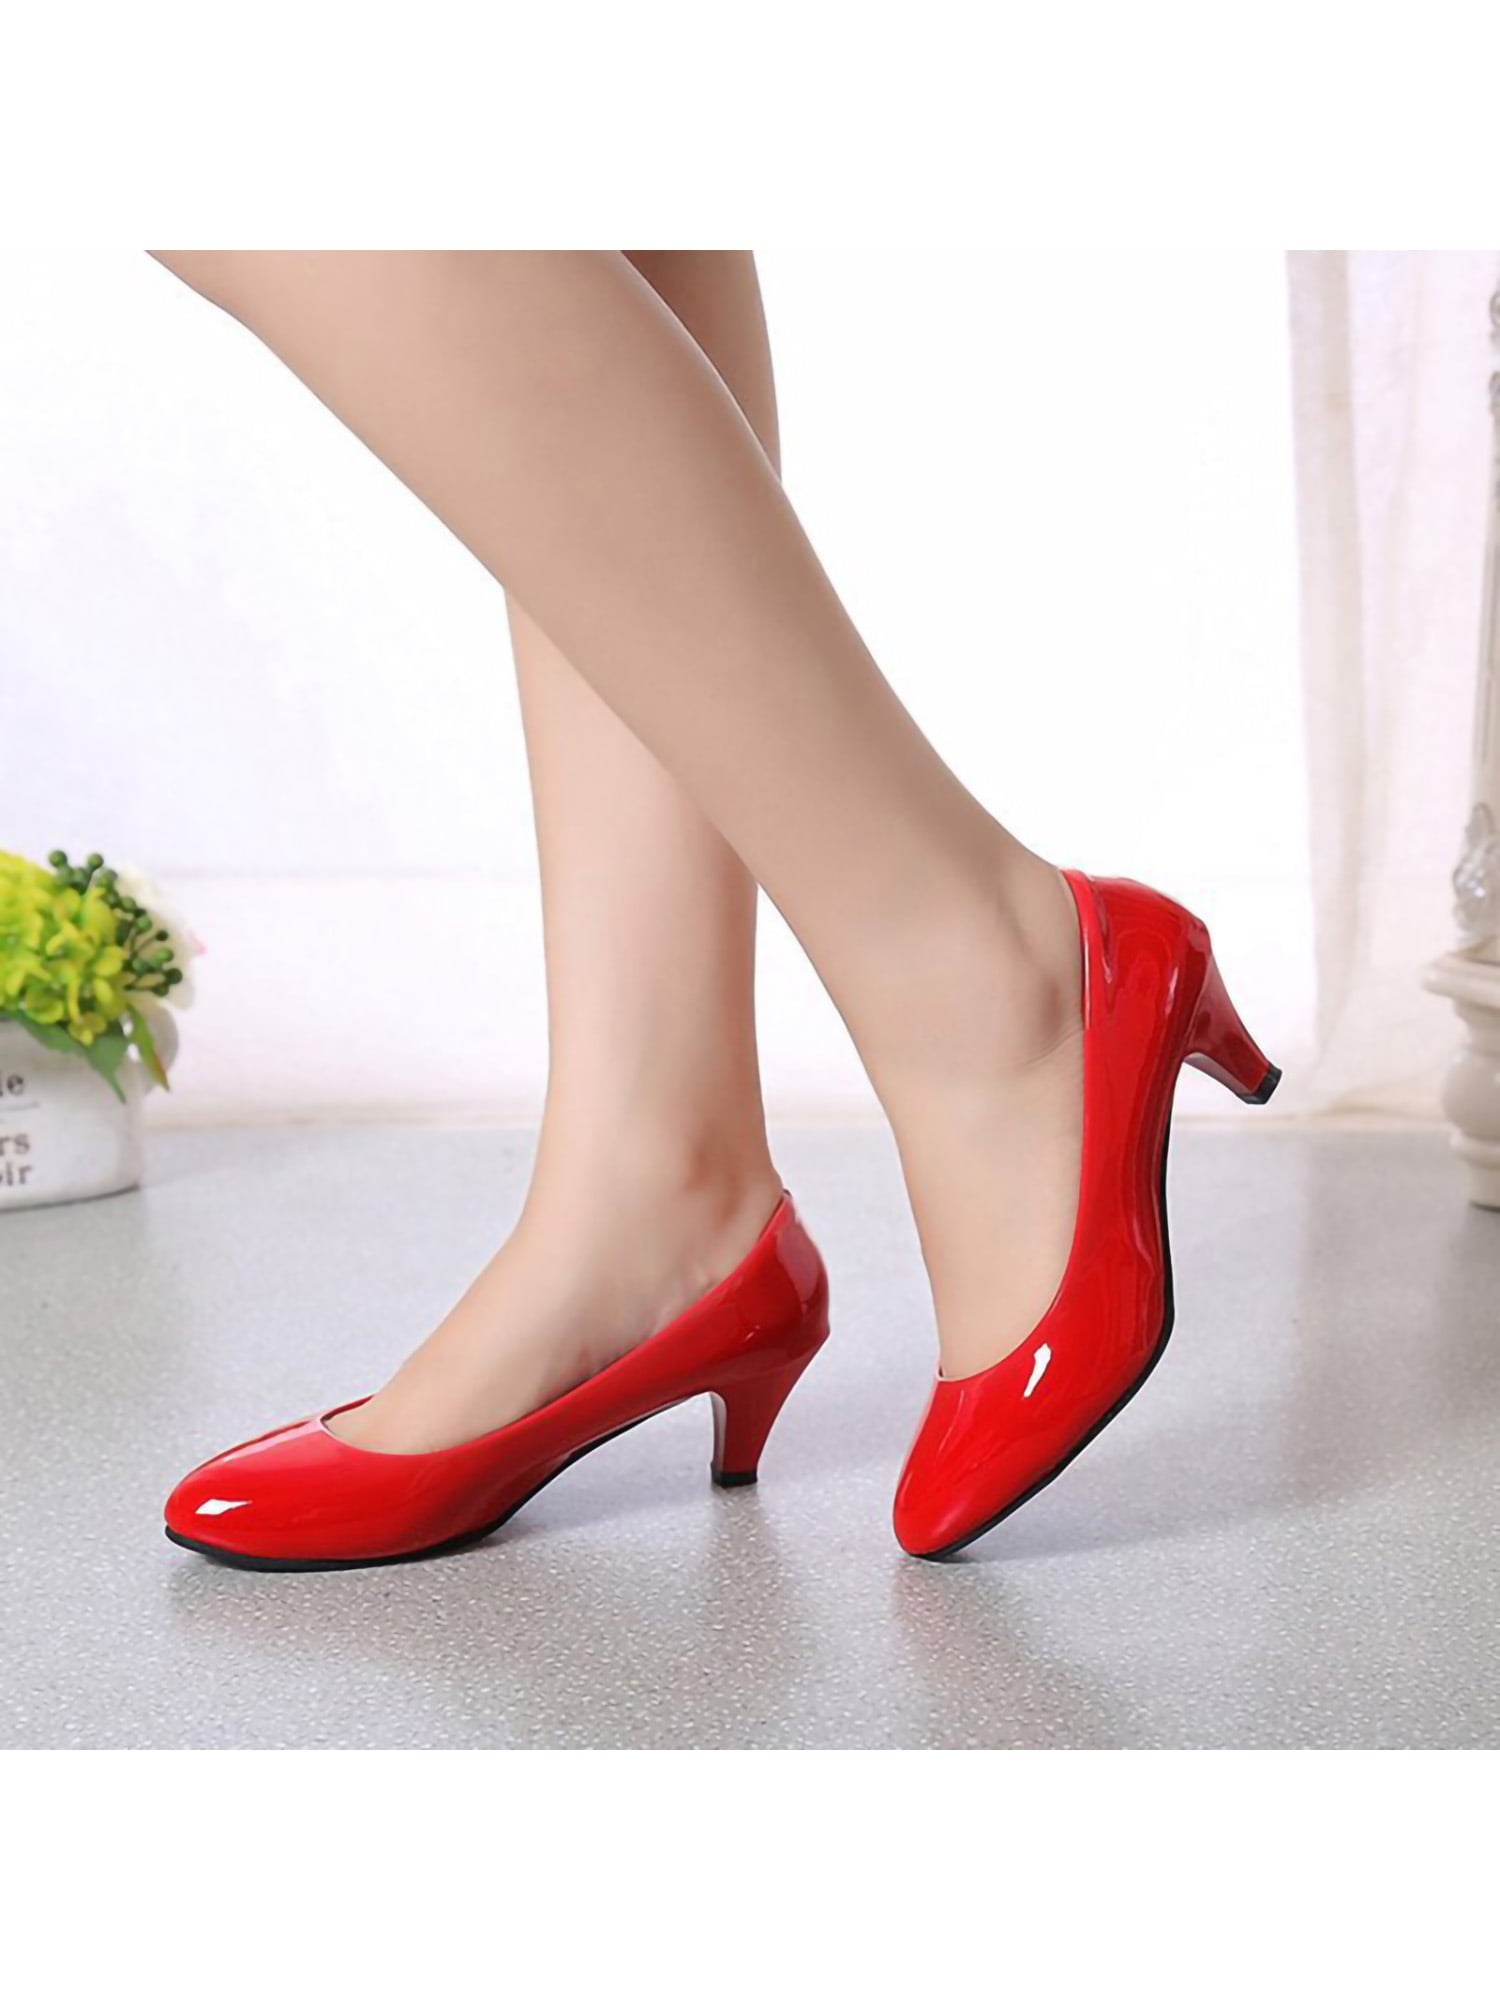 So Chic Pointed Toe Block Heels | Heels, Small heel shoes, Cute shoes heels